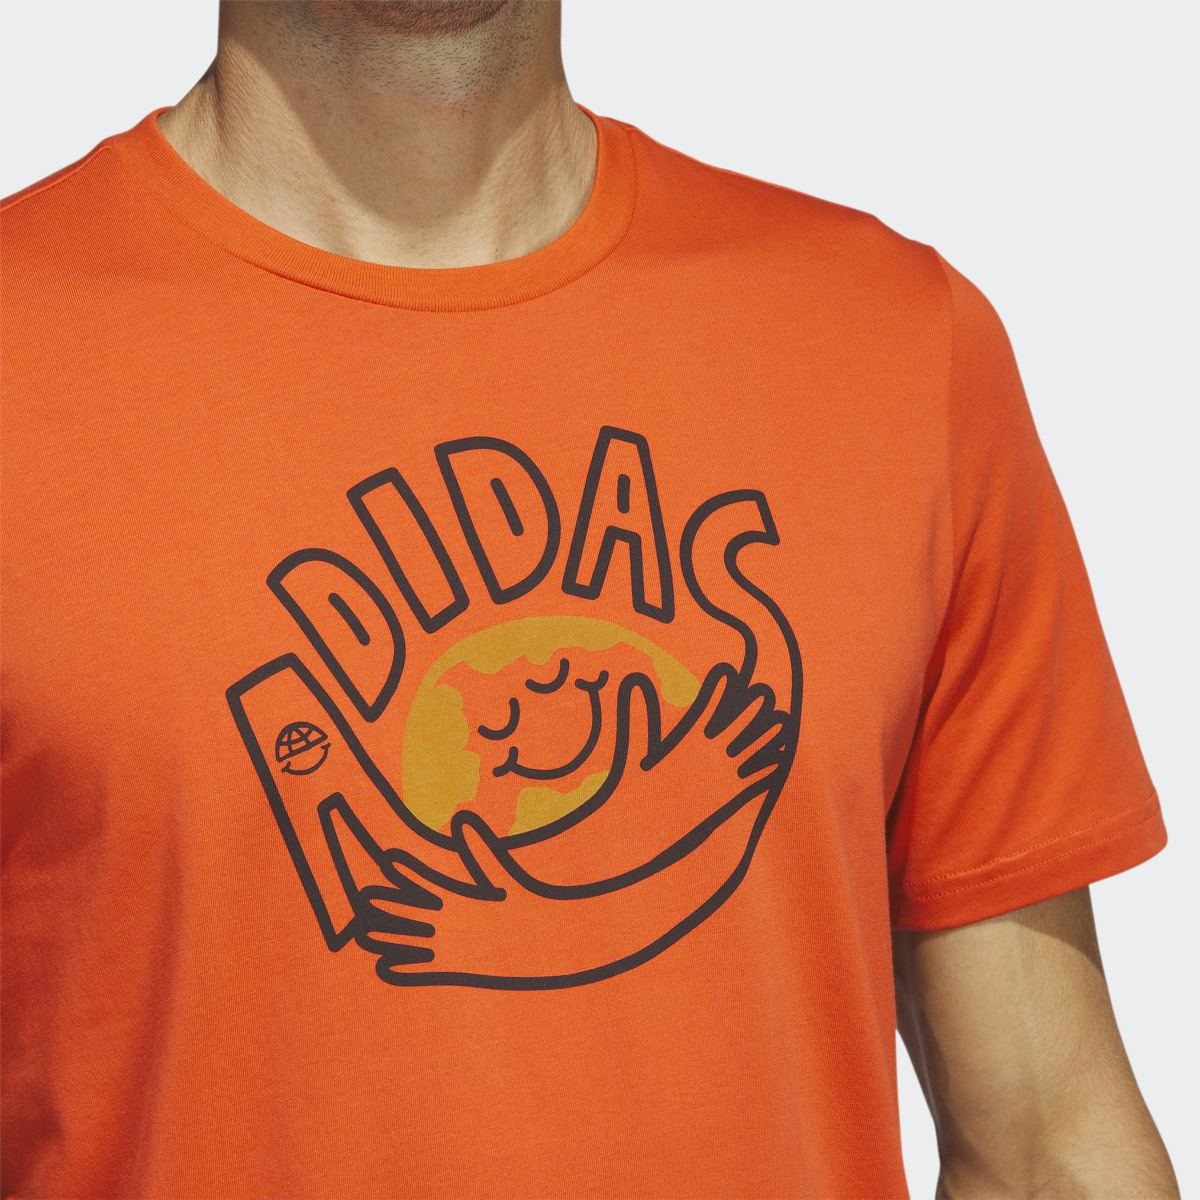 Adidas Change Through Sports Earth Graphic T-Shirt. 6